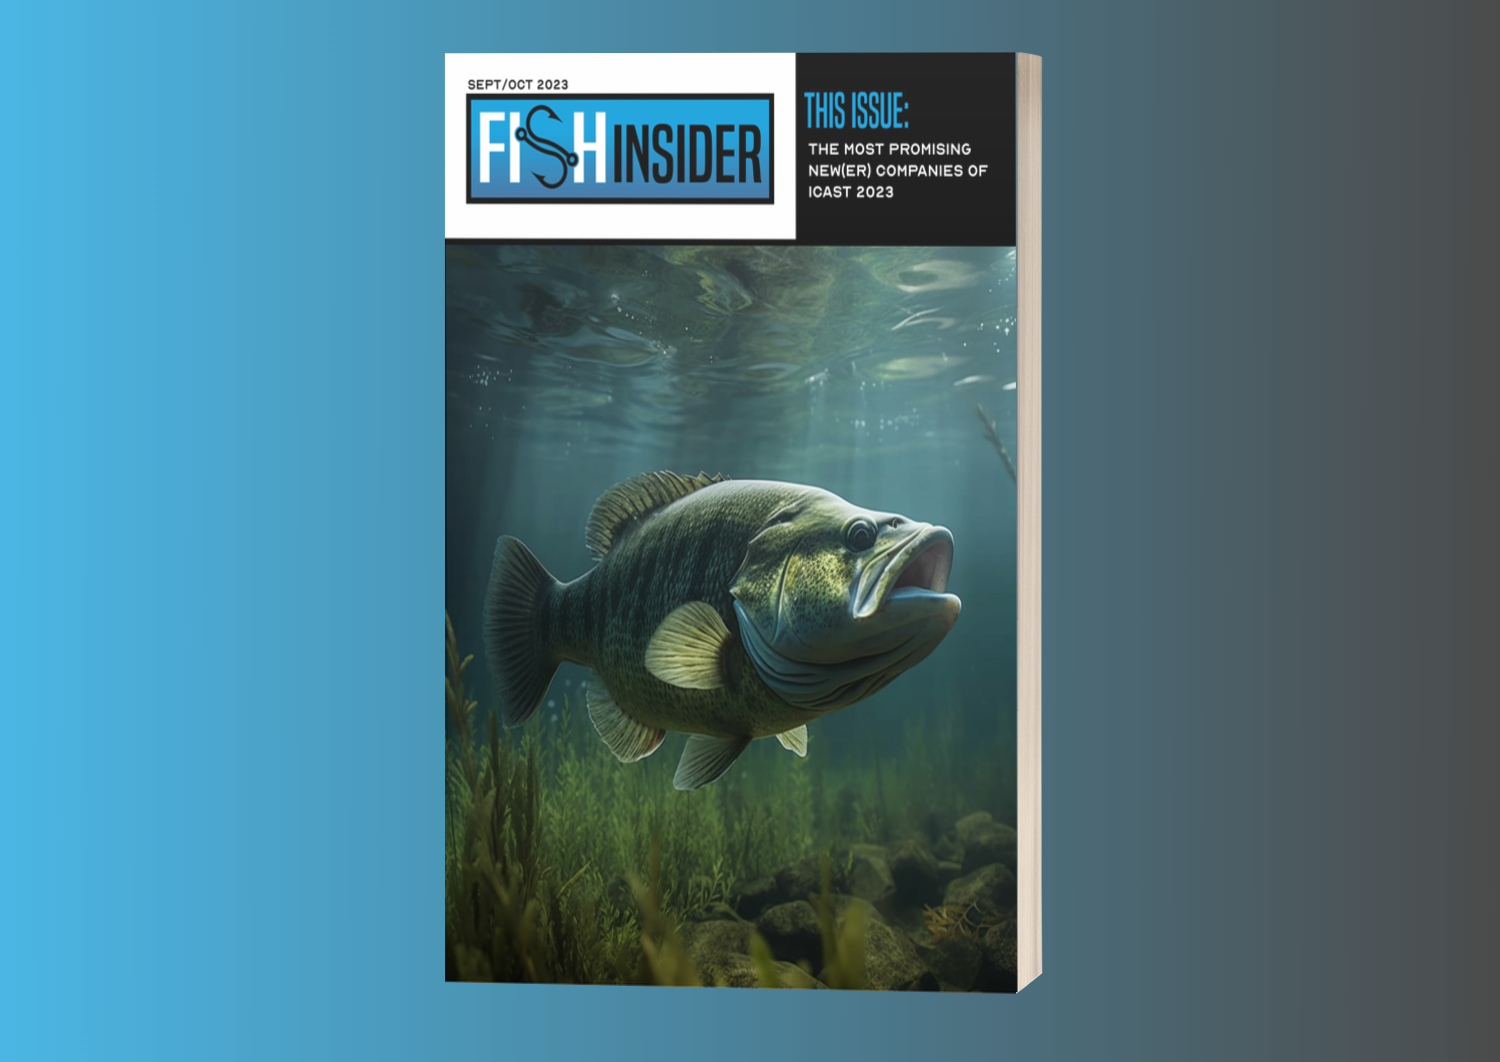 Fish Insider magazine